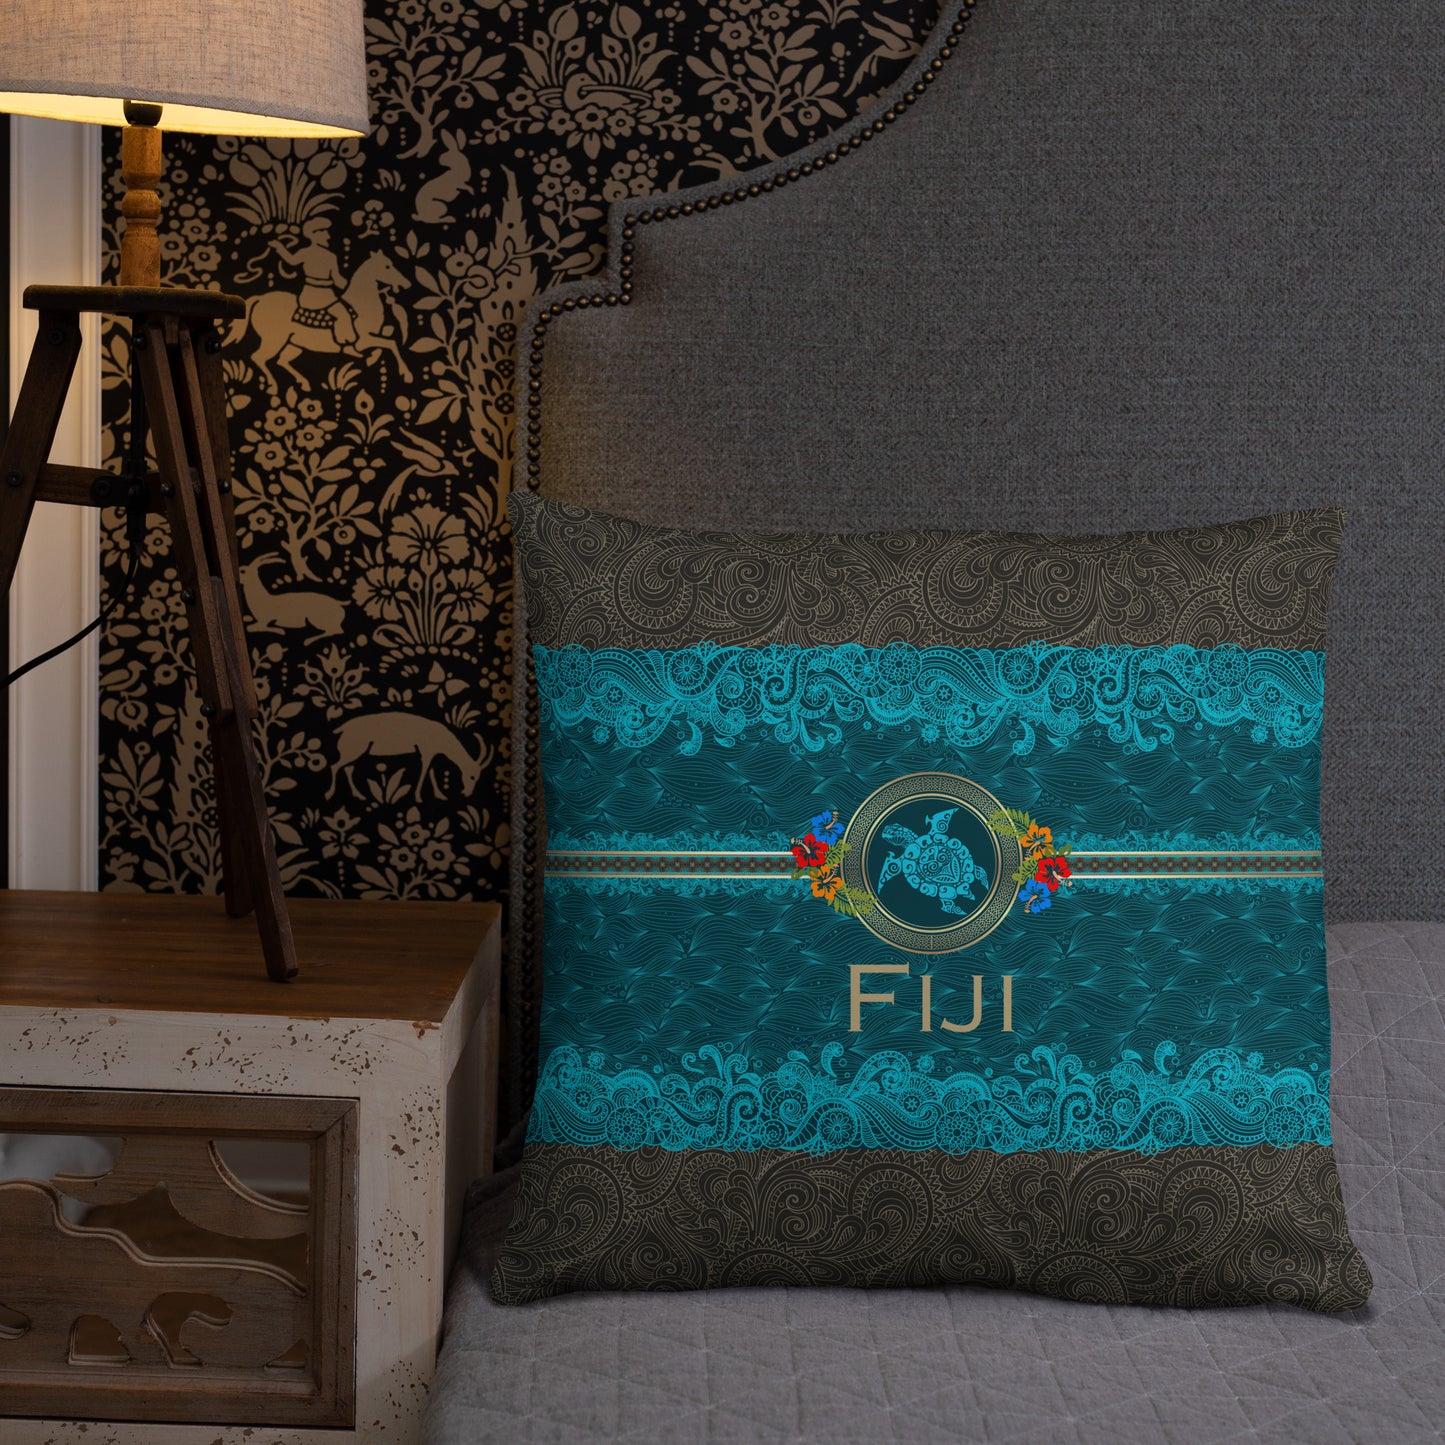 Fiji Travel Gift | Fiji Vacation Gift | Fiji Travel Souvenir | Fiji Vacation Memento | Fiji Home Décor | Keepsake Souvenir Gift | Travel Vacation Gift | World Travel Gift Pillow